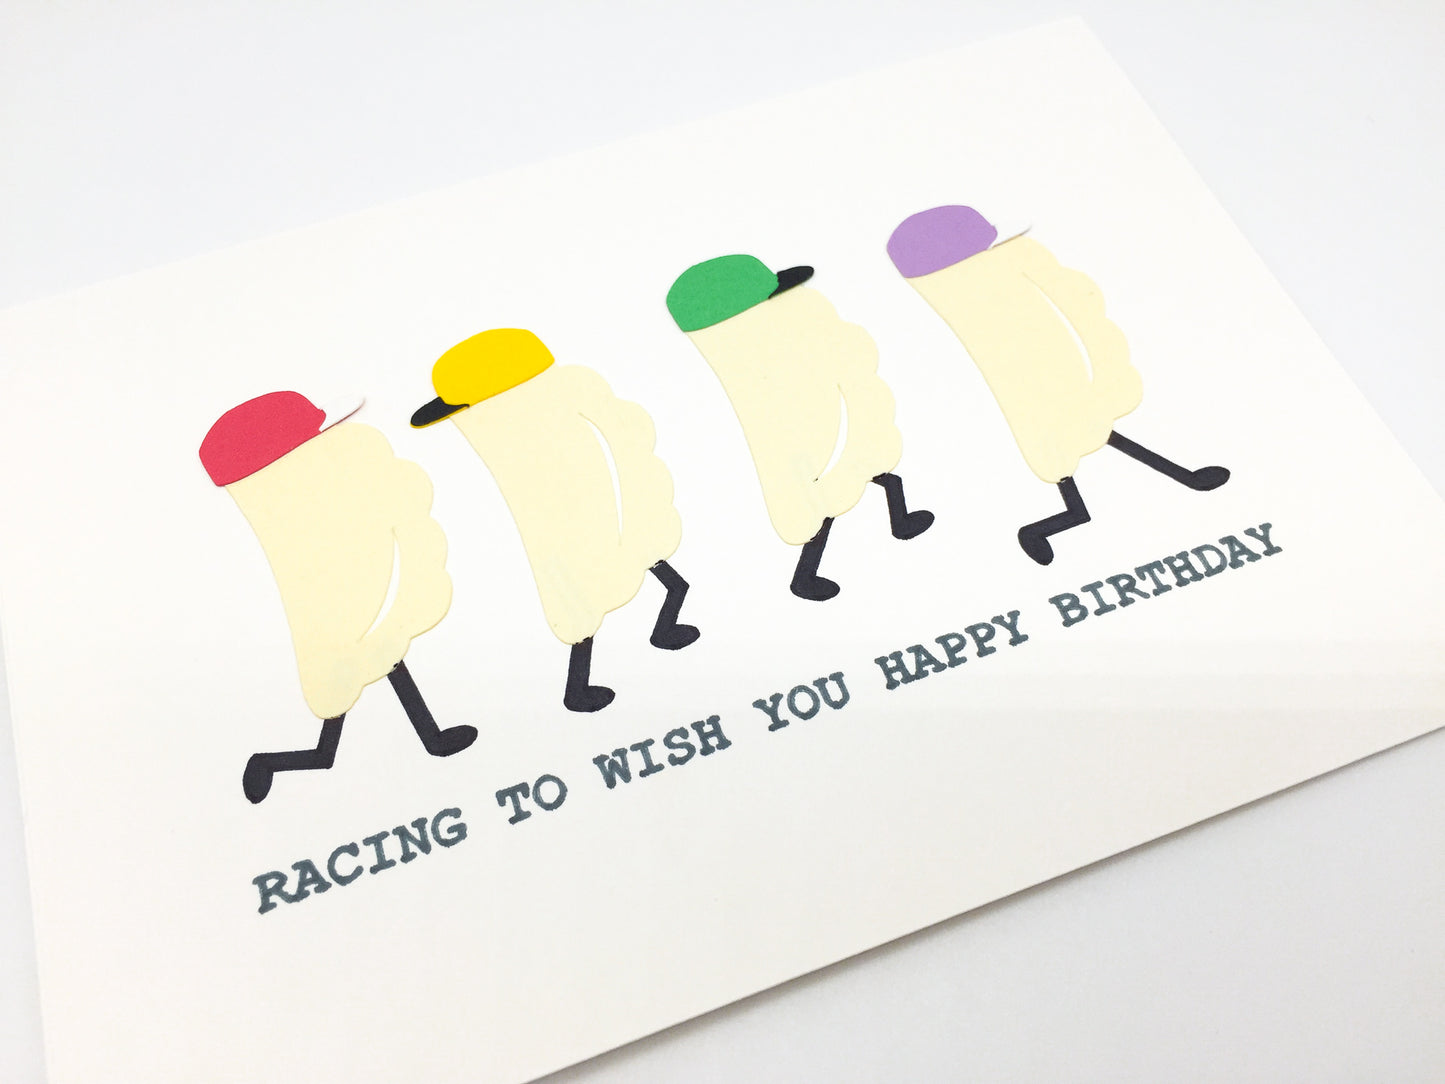 Racing To Wish You Card